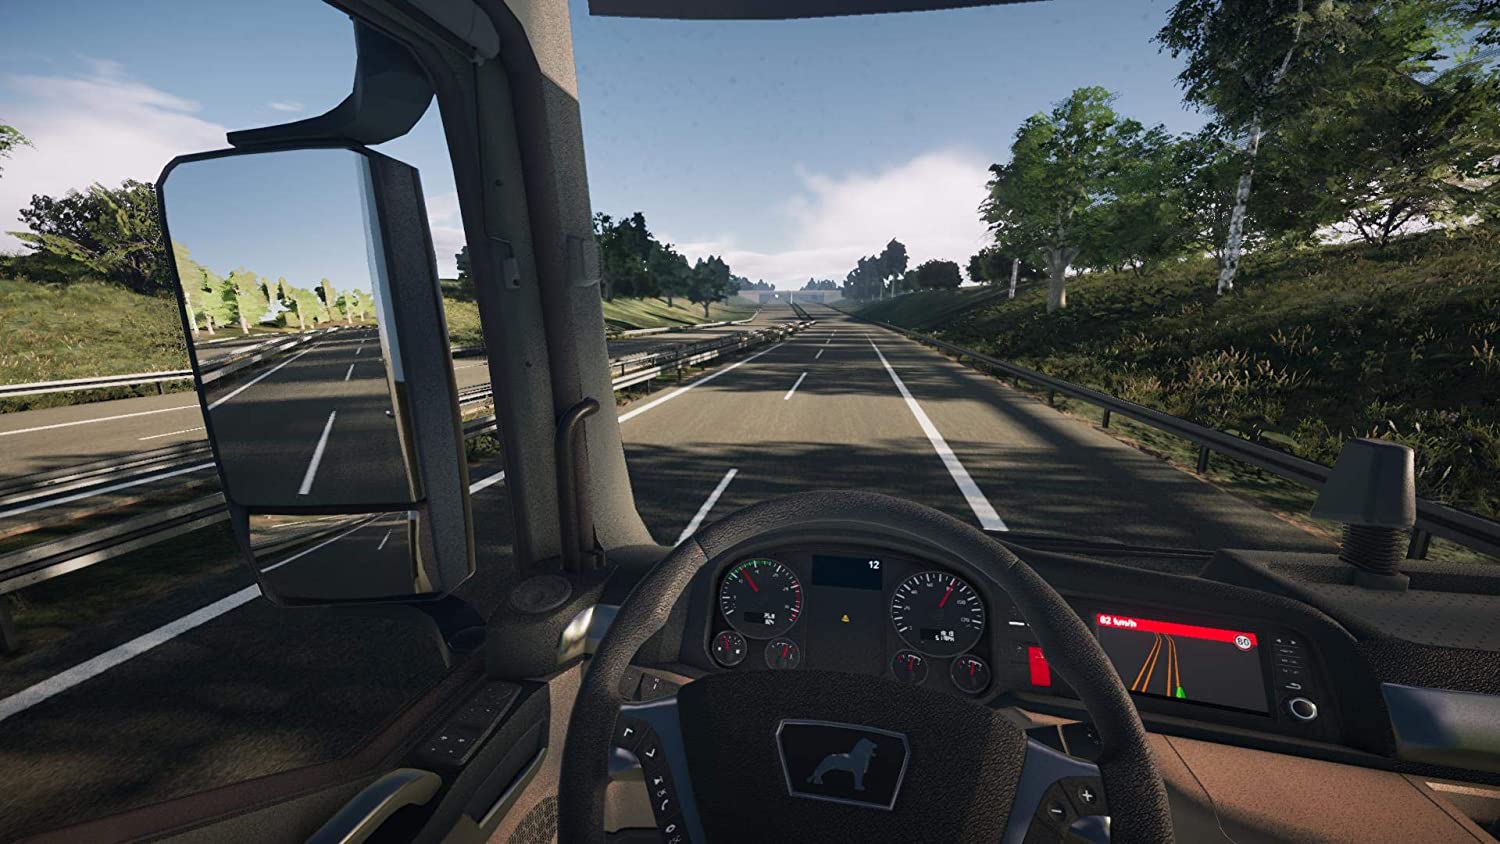 Simulator как установить игры. On the Road – Truck Simulation игра. Truck Simulator ps4. On the Road Truck Simulator для PLAYSTATION 4. Евро трак симулятор на ПС 4.